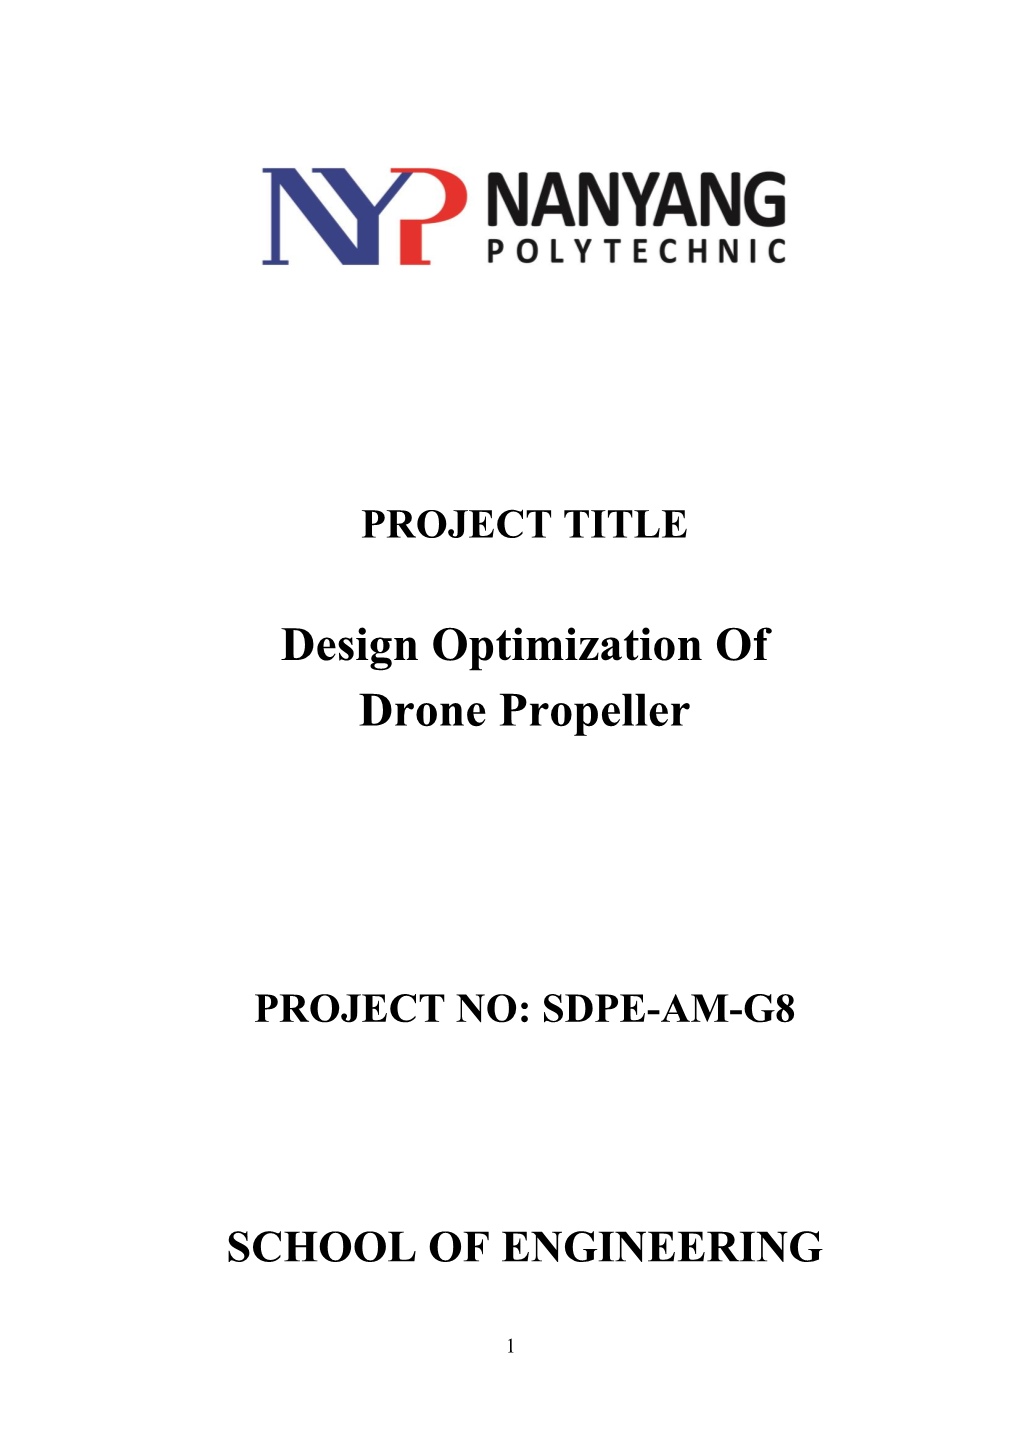 Design Optimization of Drone Propeller